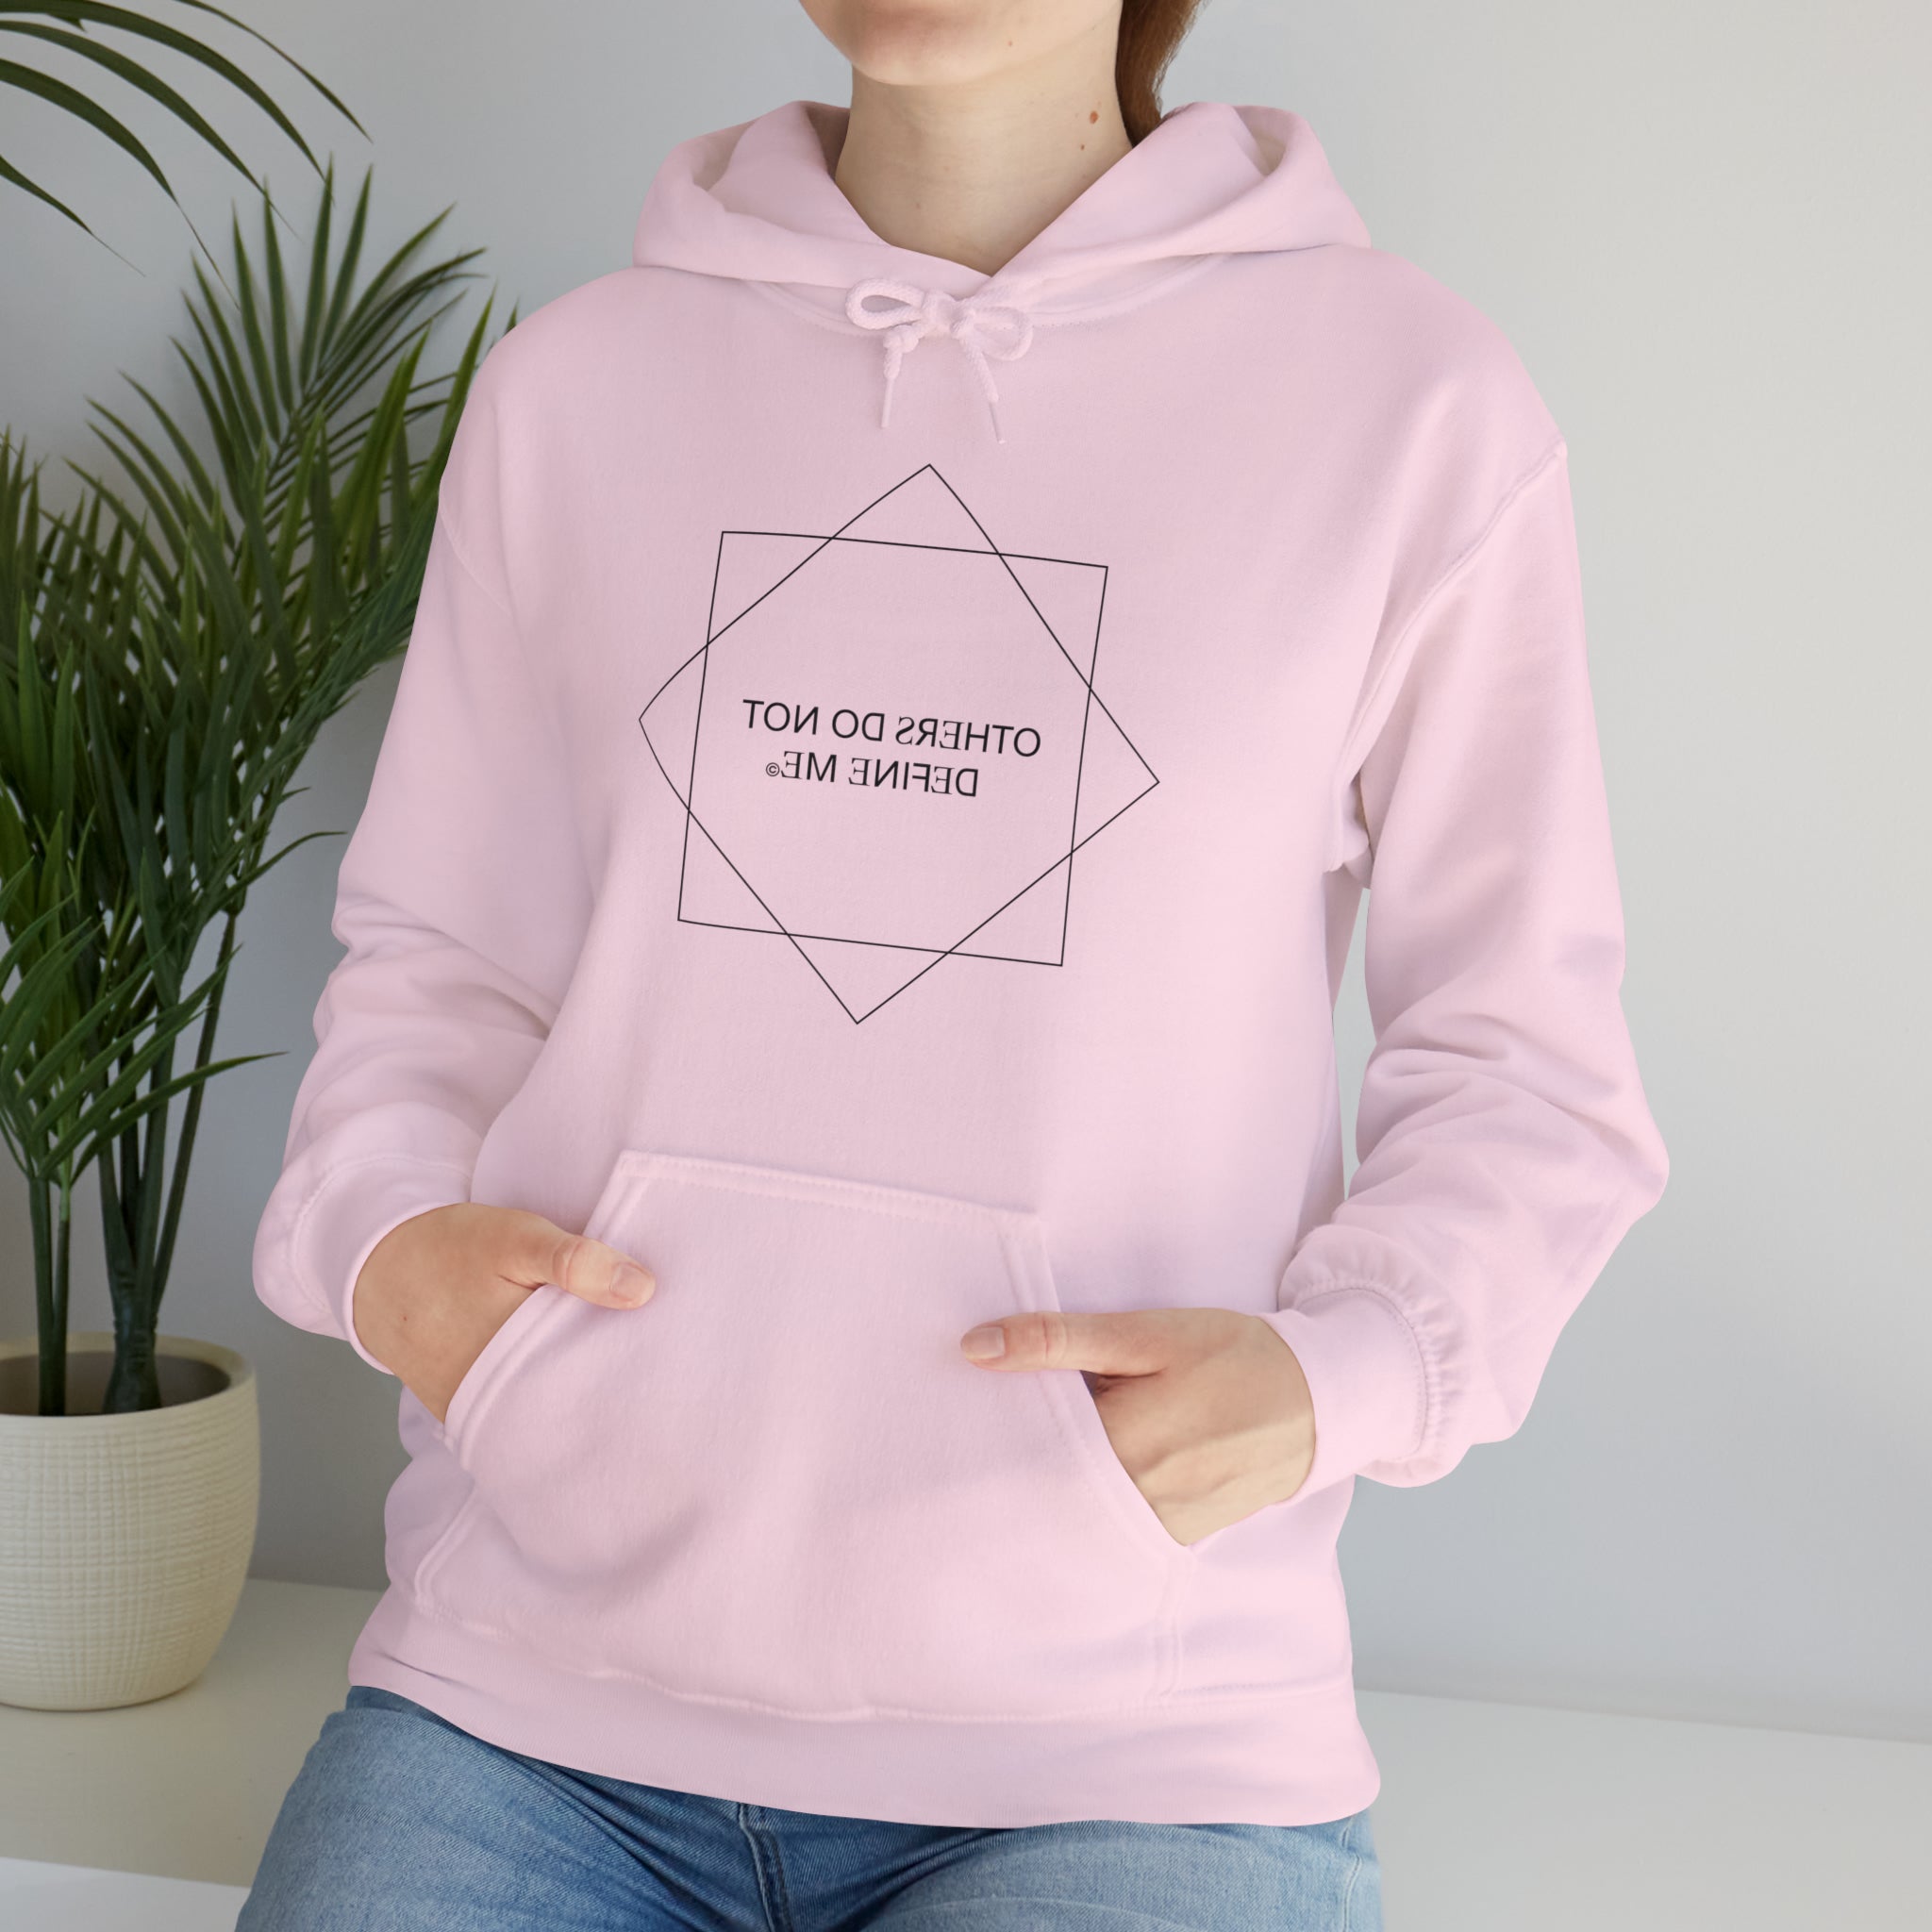 "Others Do Not Define Me" Unisex Hooded Sweatshirt